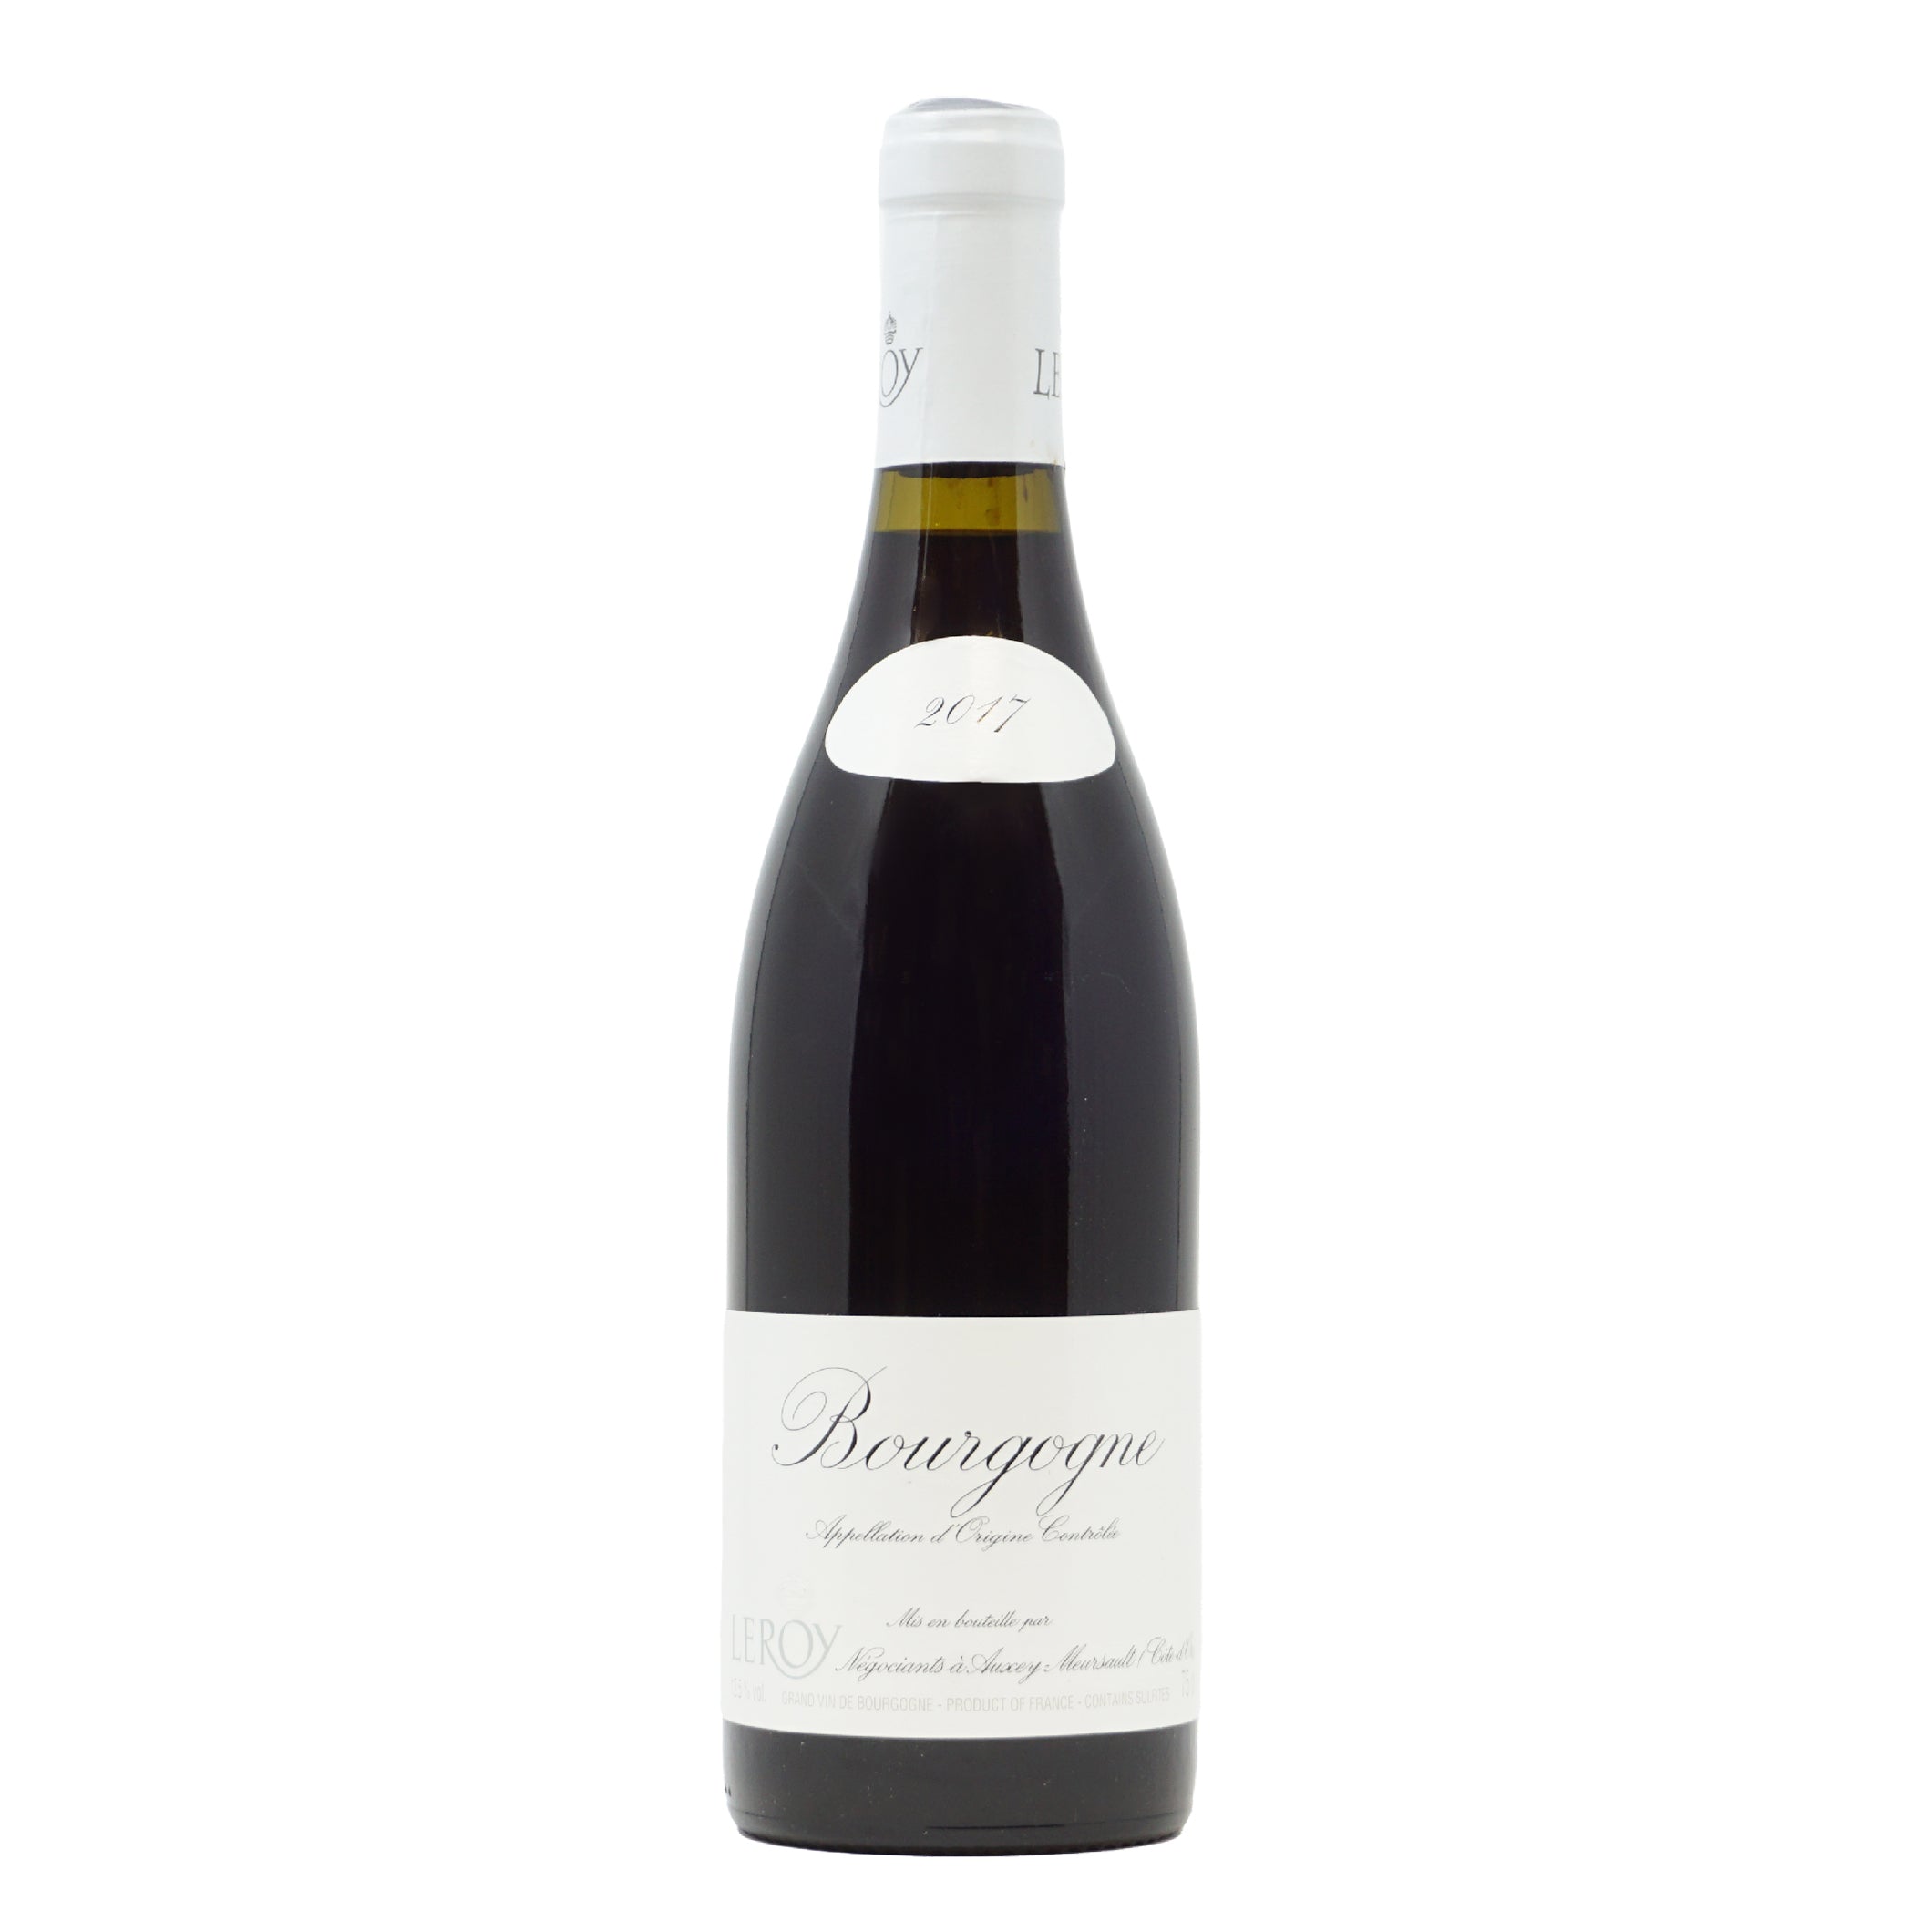 Bourgogne Rouge 2017 Leroy Negociant lt.0.750